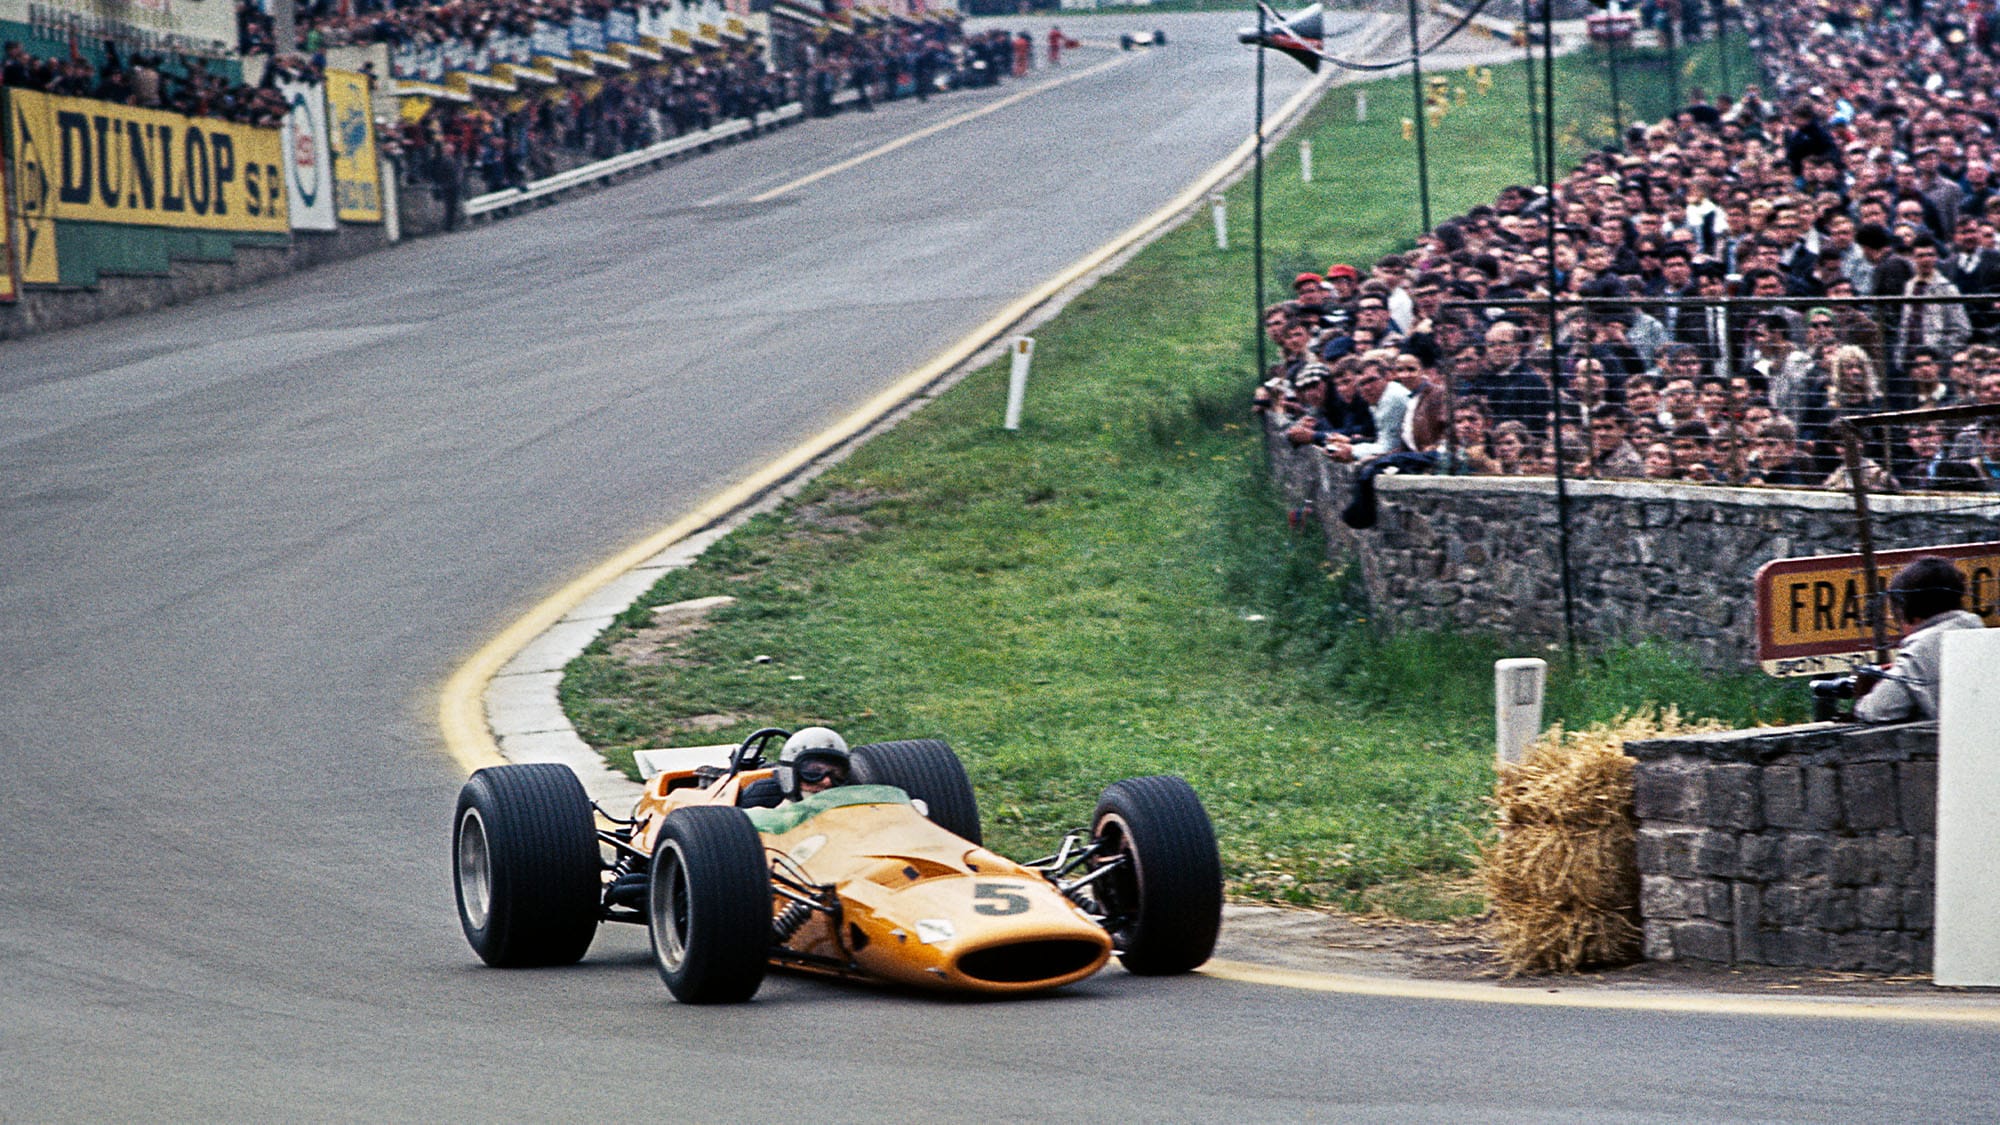 1968 Belgian Grand Prix: Spa Francorchamps Monologue on McLaren's